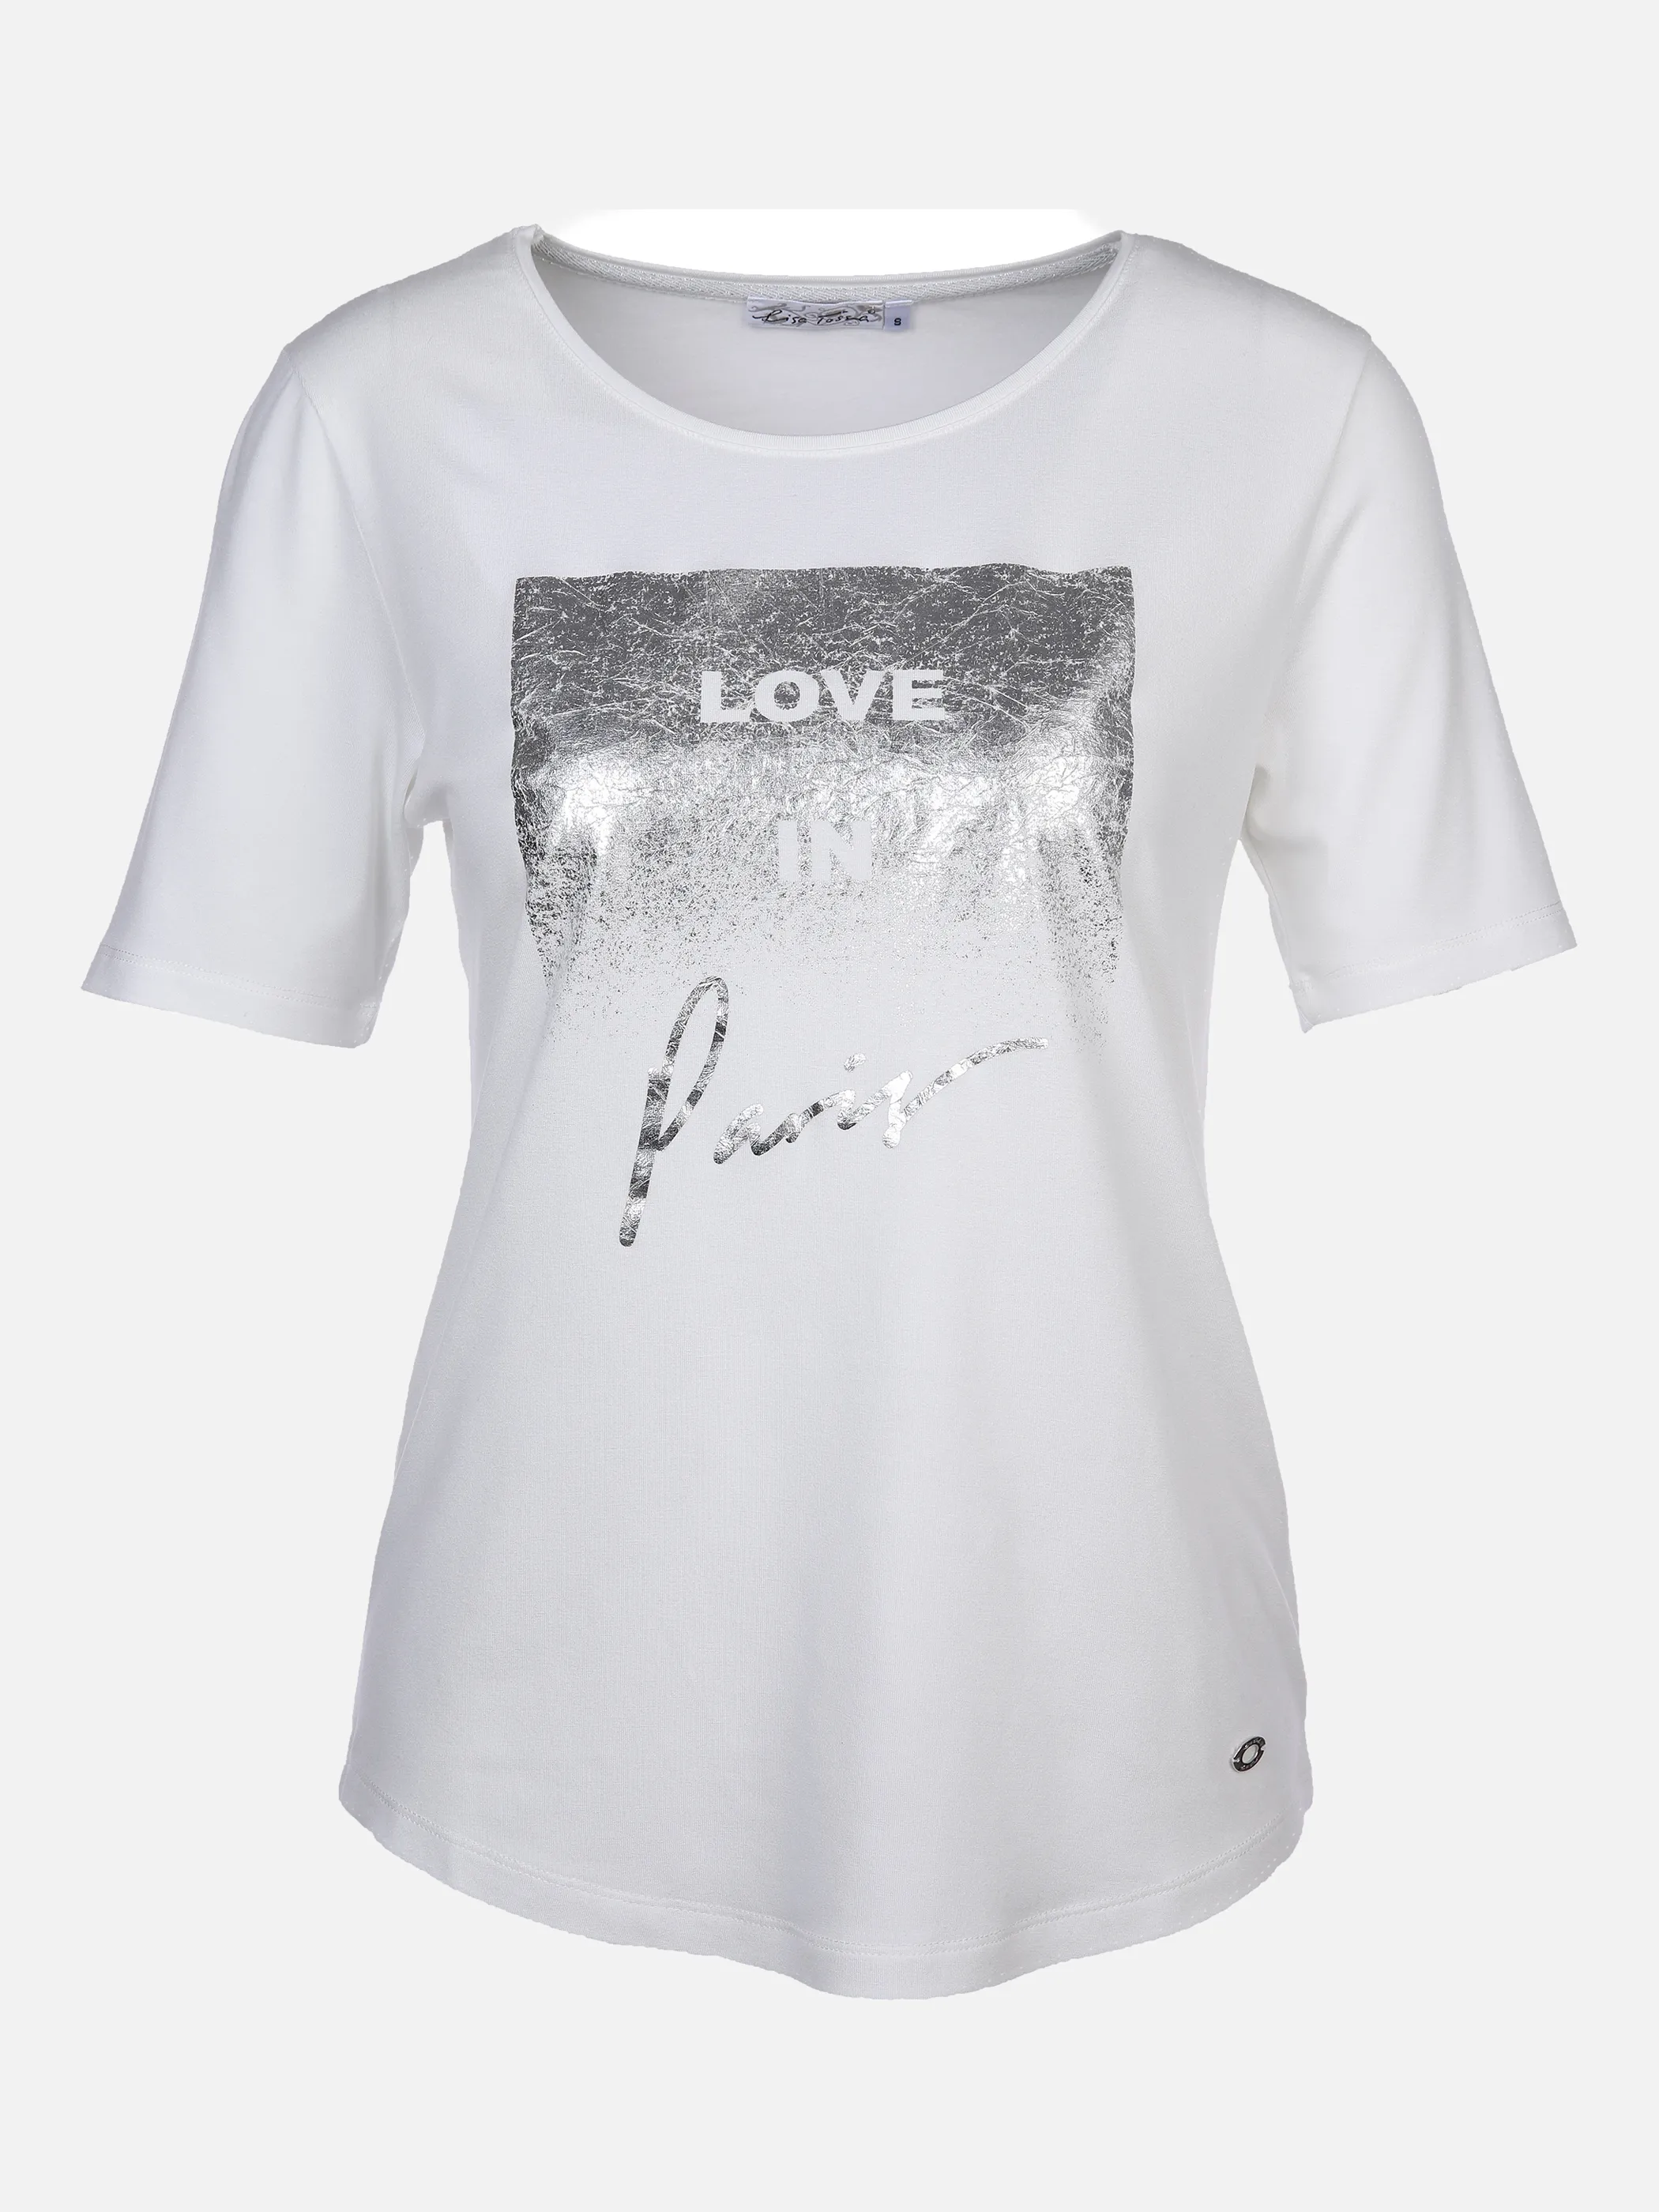 Lisa Tossa Da-T-Shirt mit Folienprint Weiß 877570 OFFWHITE 1